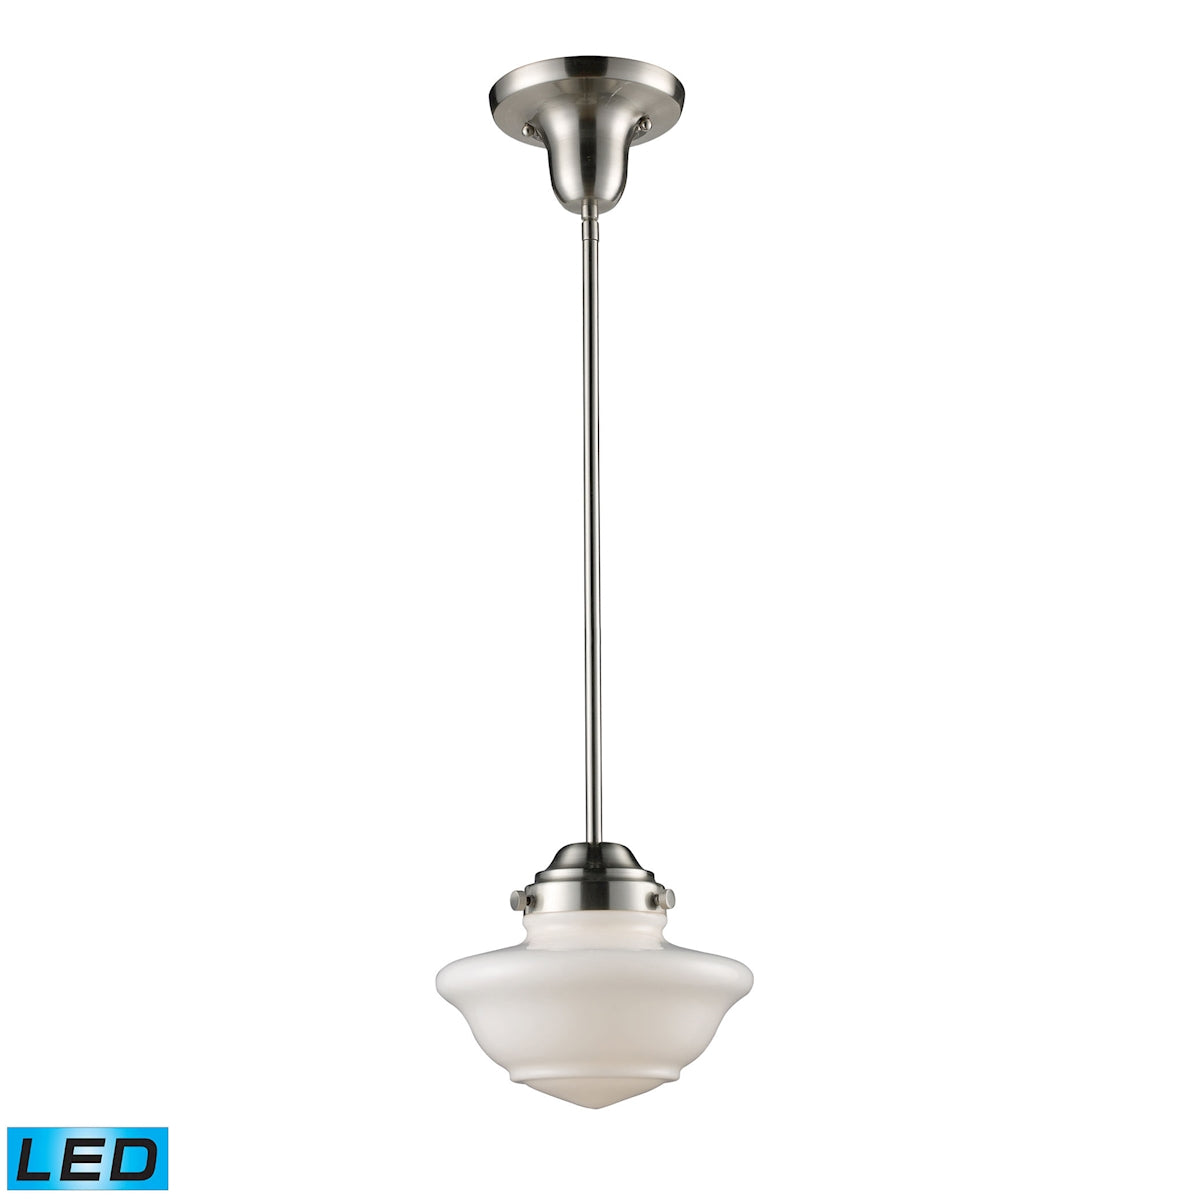 ELK Lighting 69042-1-LED Schoolhouse 1-Light Mini Pendant in Satin Nickel with White Glass - Includes LED Bulb